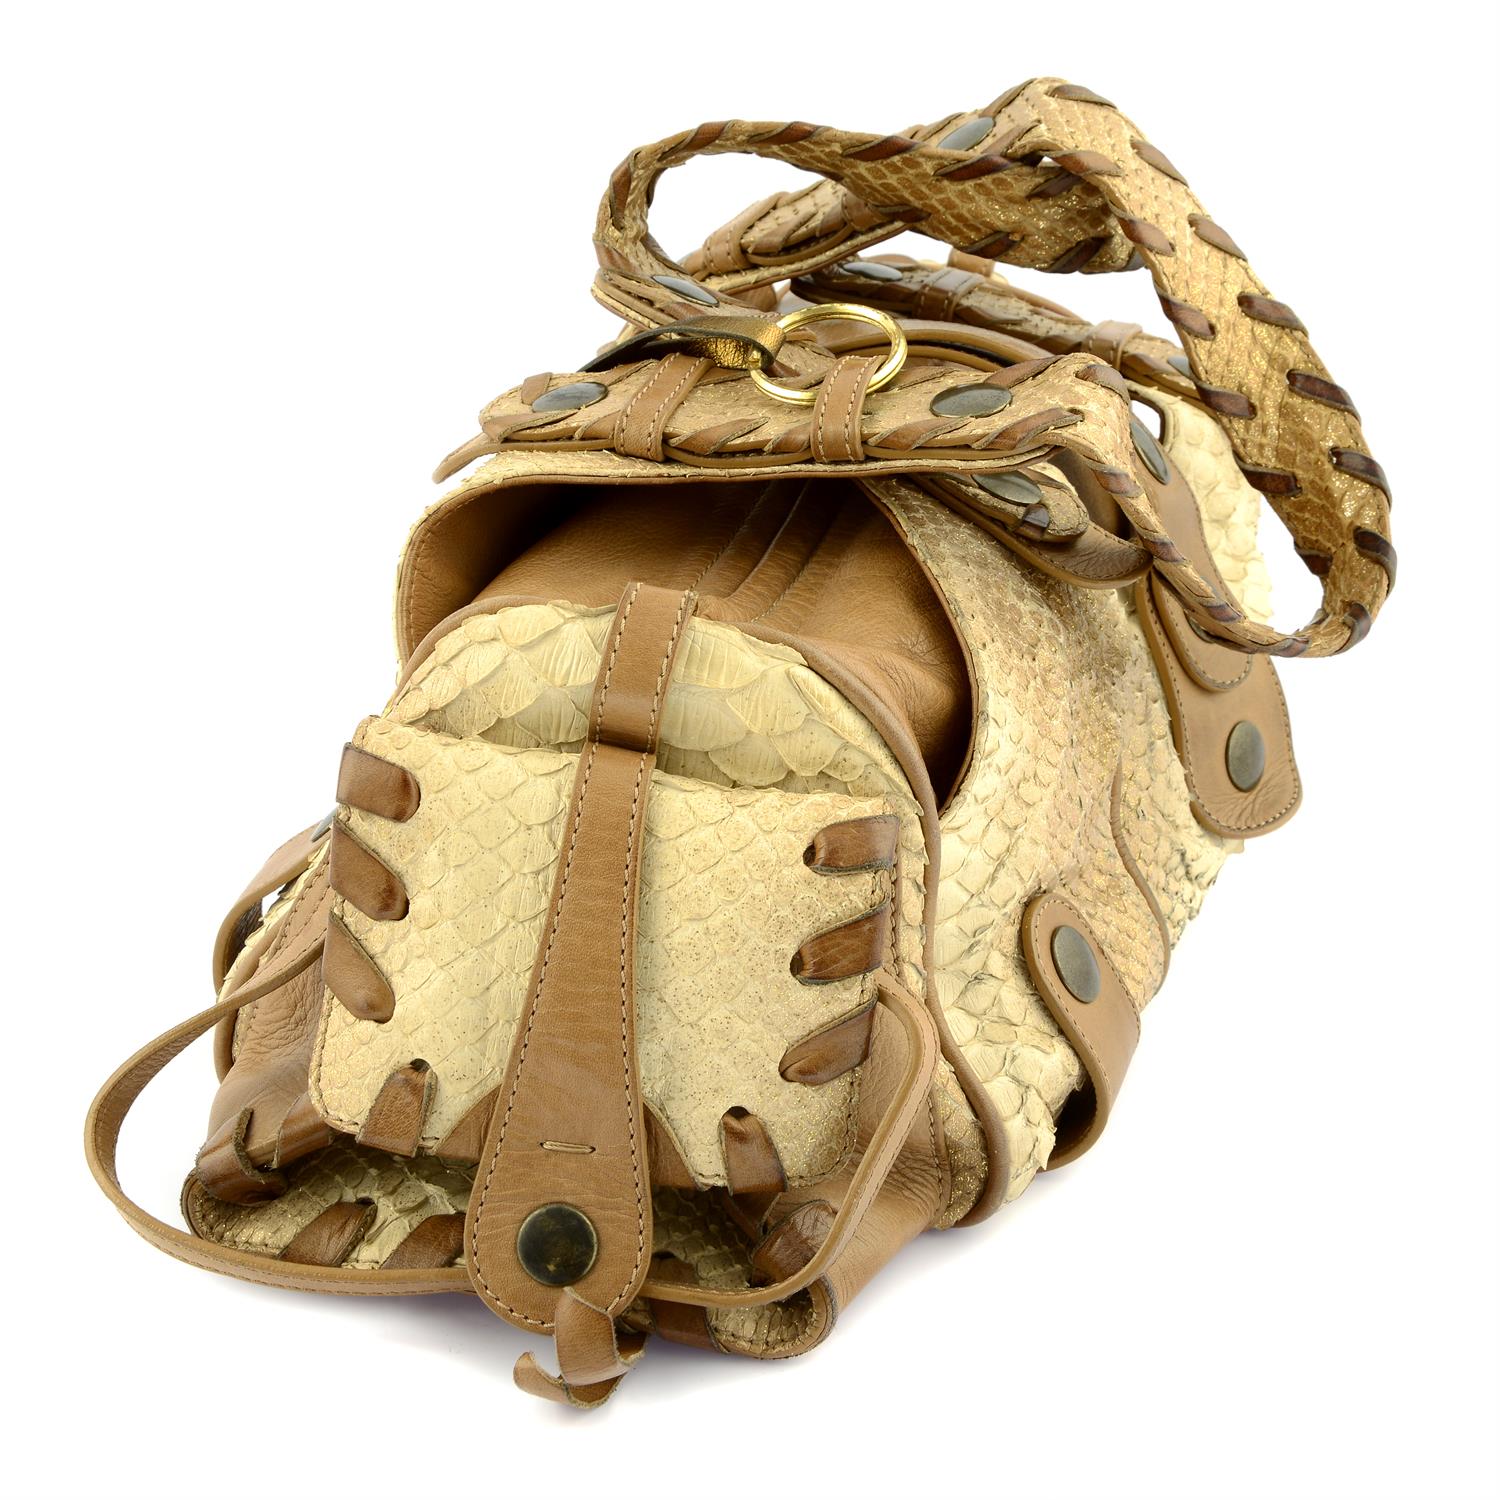 CHLOÉ - a beige Silverado Python leather shoulder bag. - Image 3 of 5